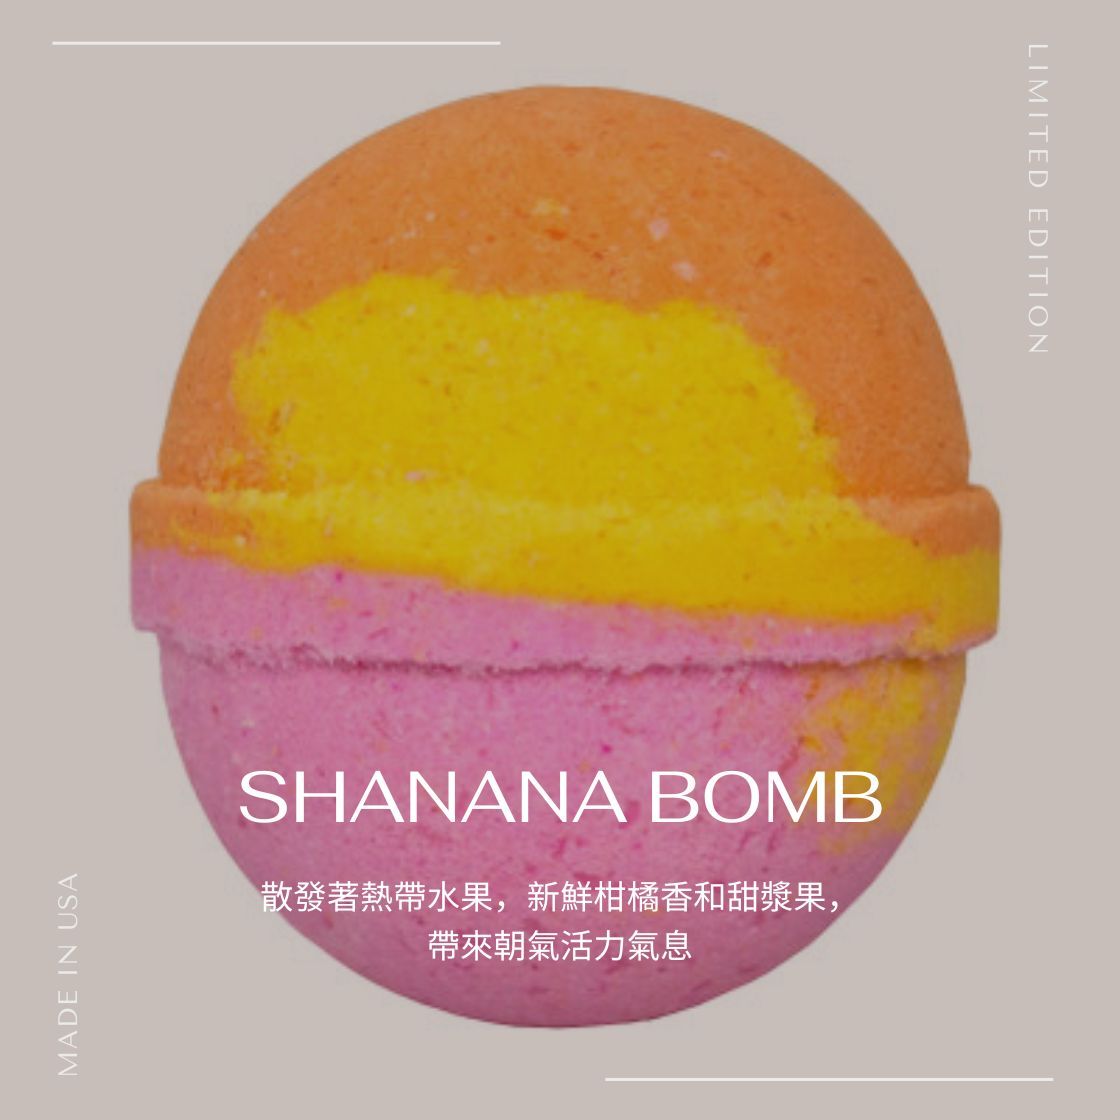 Shanana Bomb - 沐浴汽泡彈 Bathbomb | 沒有浴缸也可來一個香薰浴